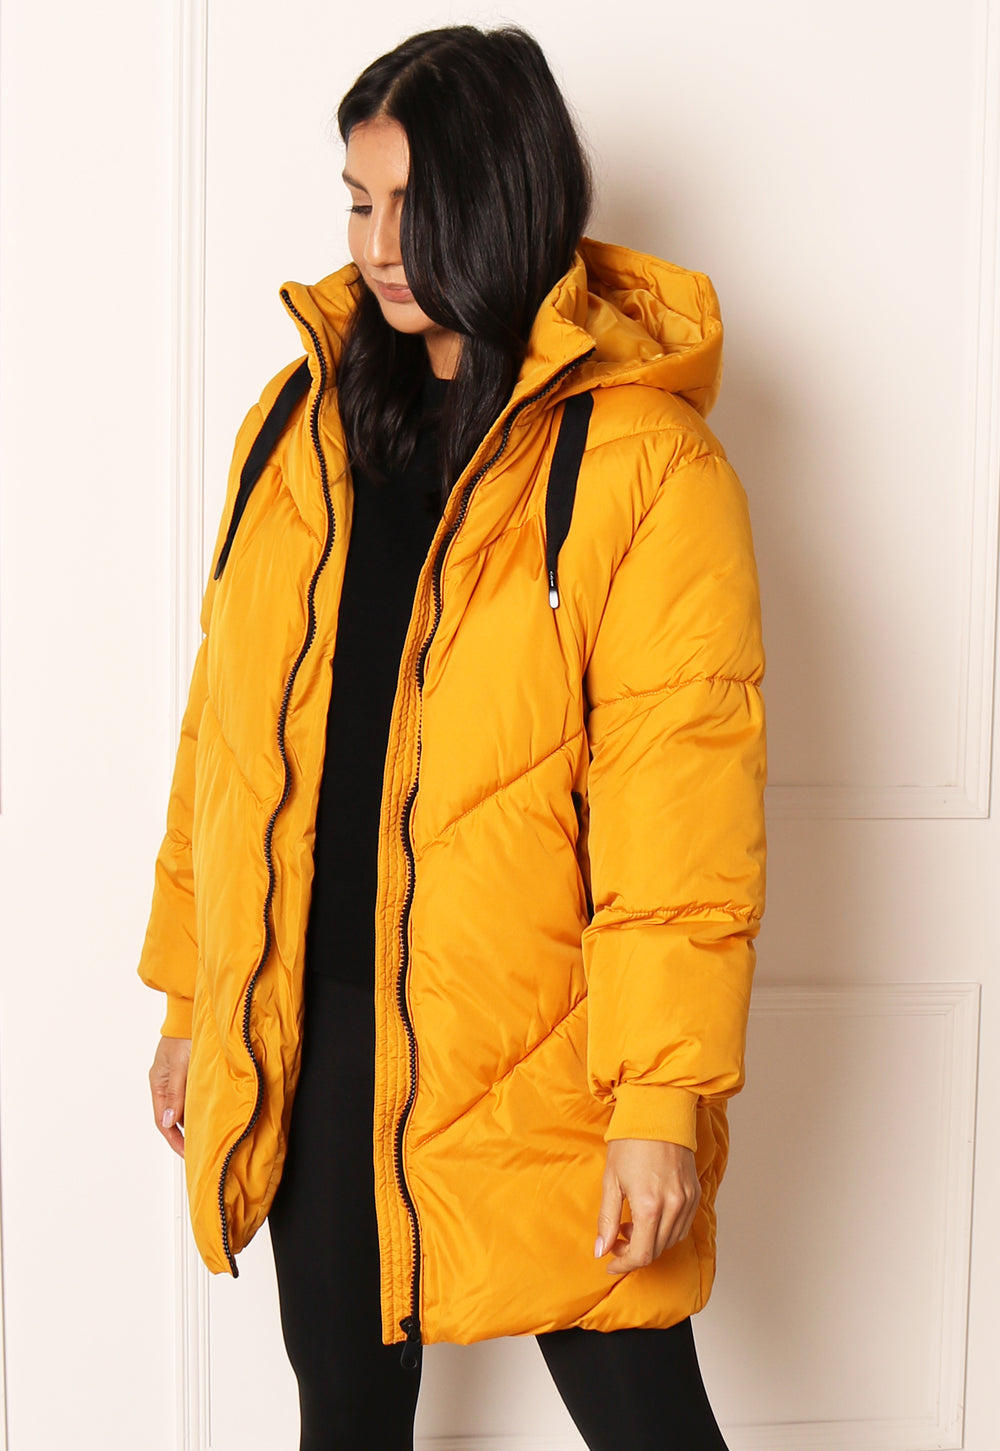 VERO MODA Beverly Oversized Longline Chevron Puffer Coat with Hood in Mustard Yellow - One Nation Clothing